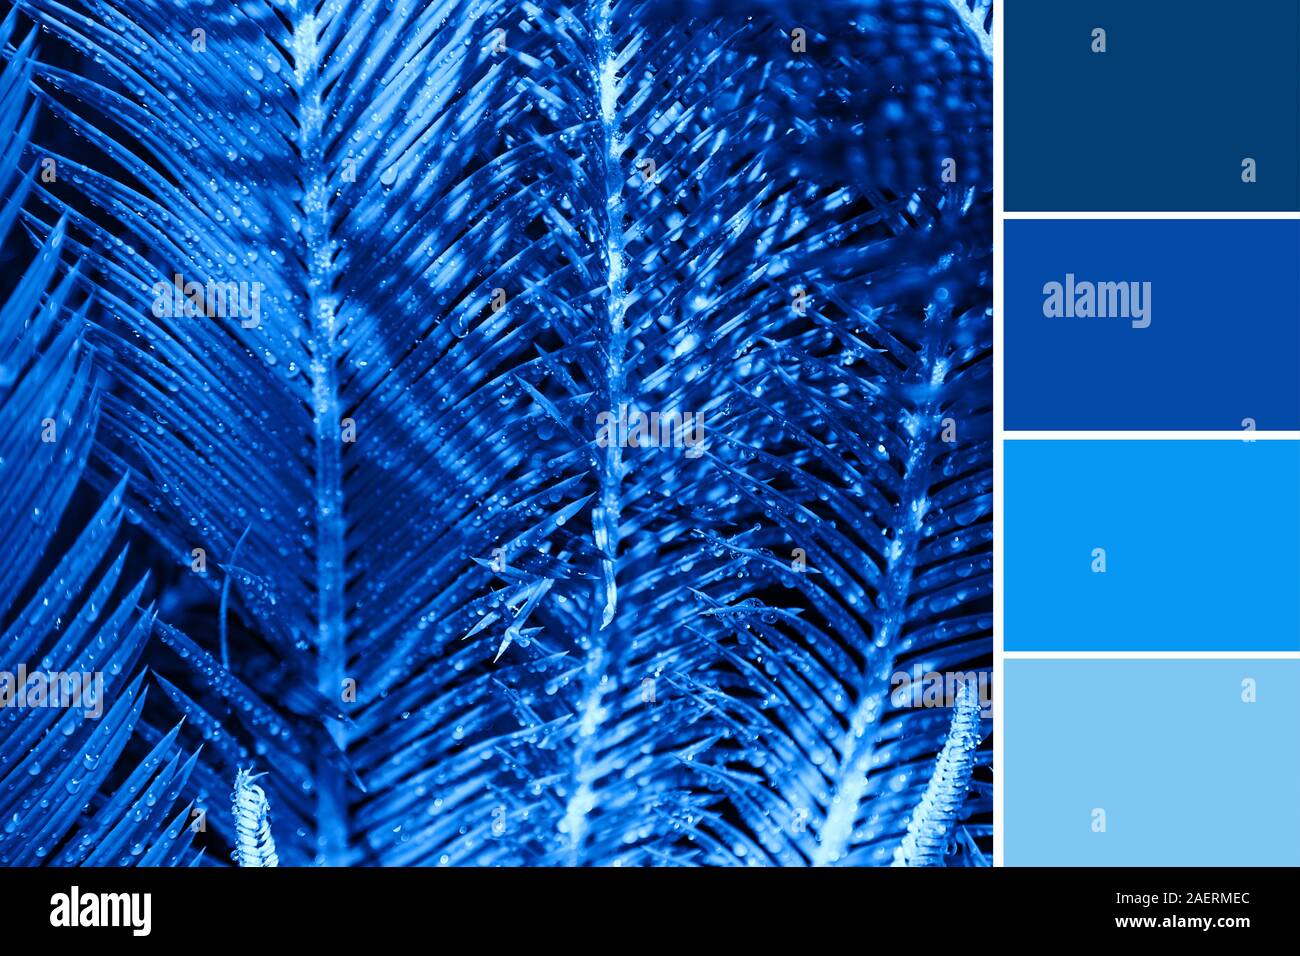 https://c8.alamy.com/comp/2AERMEC/beautiful-palm-leaves-with-blue-color-palette-2AERMEC.jpg